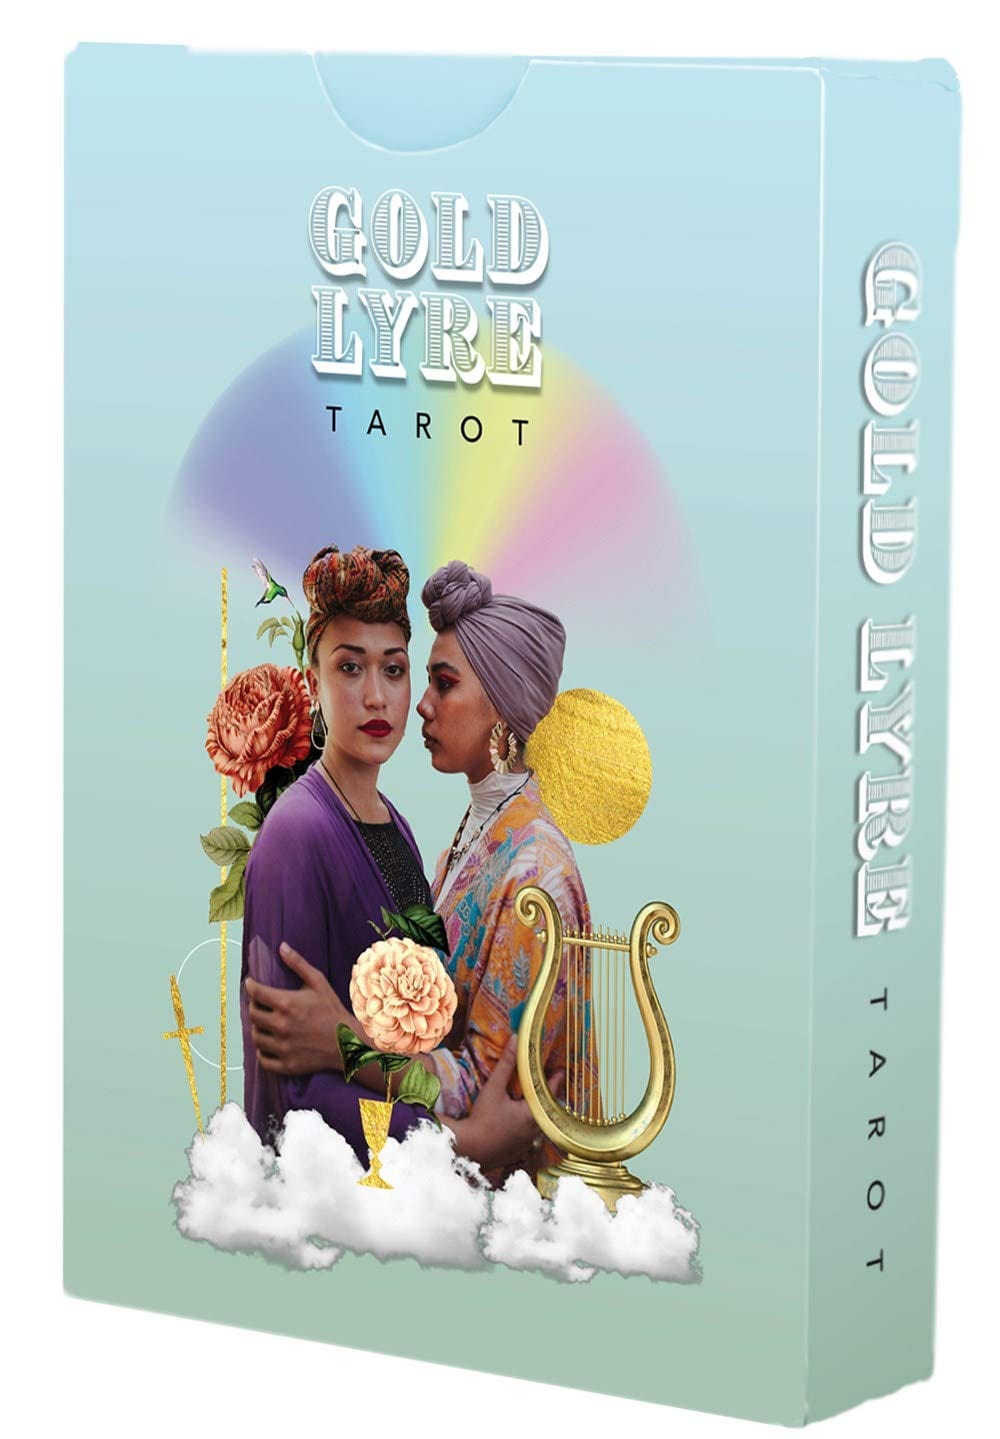 Tarot: Gold Lyre - Third Eye